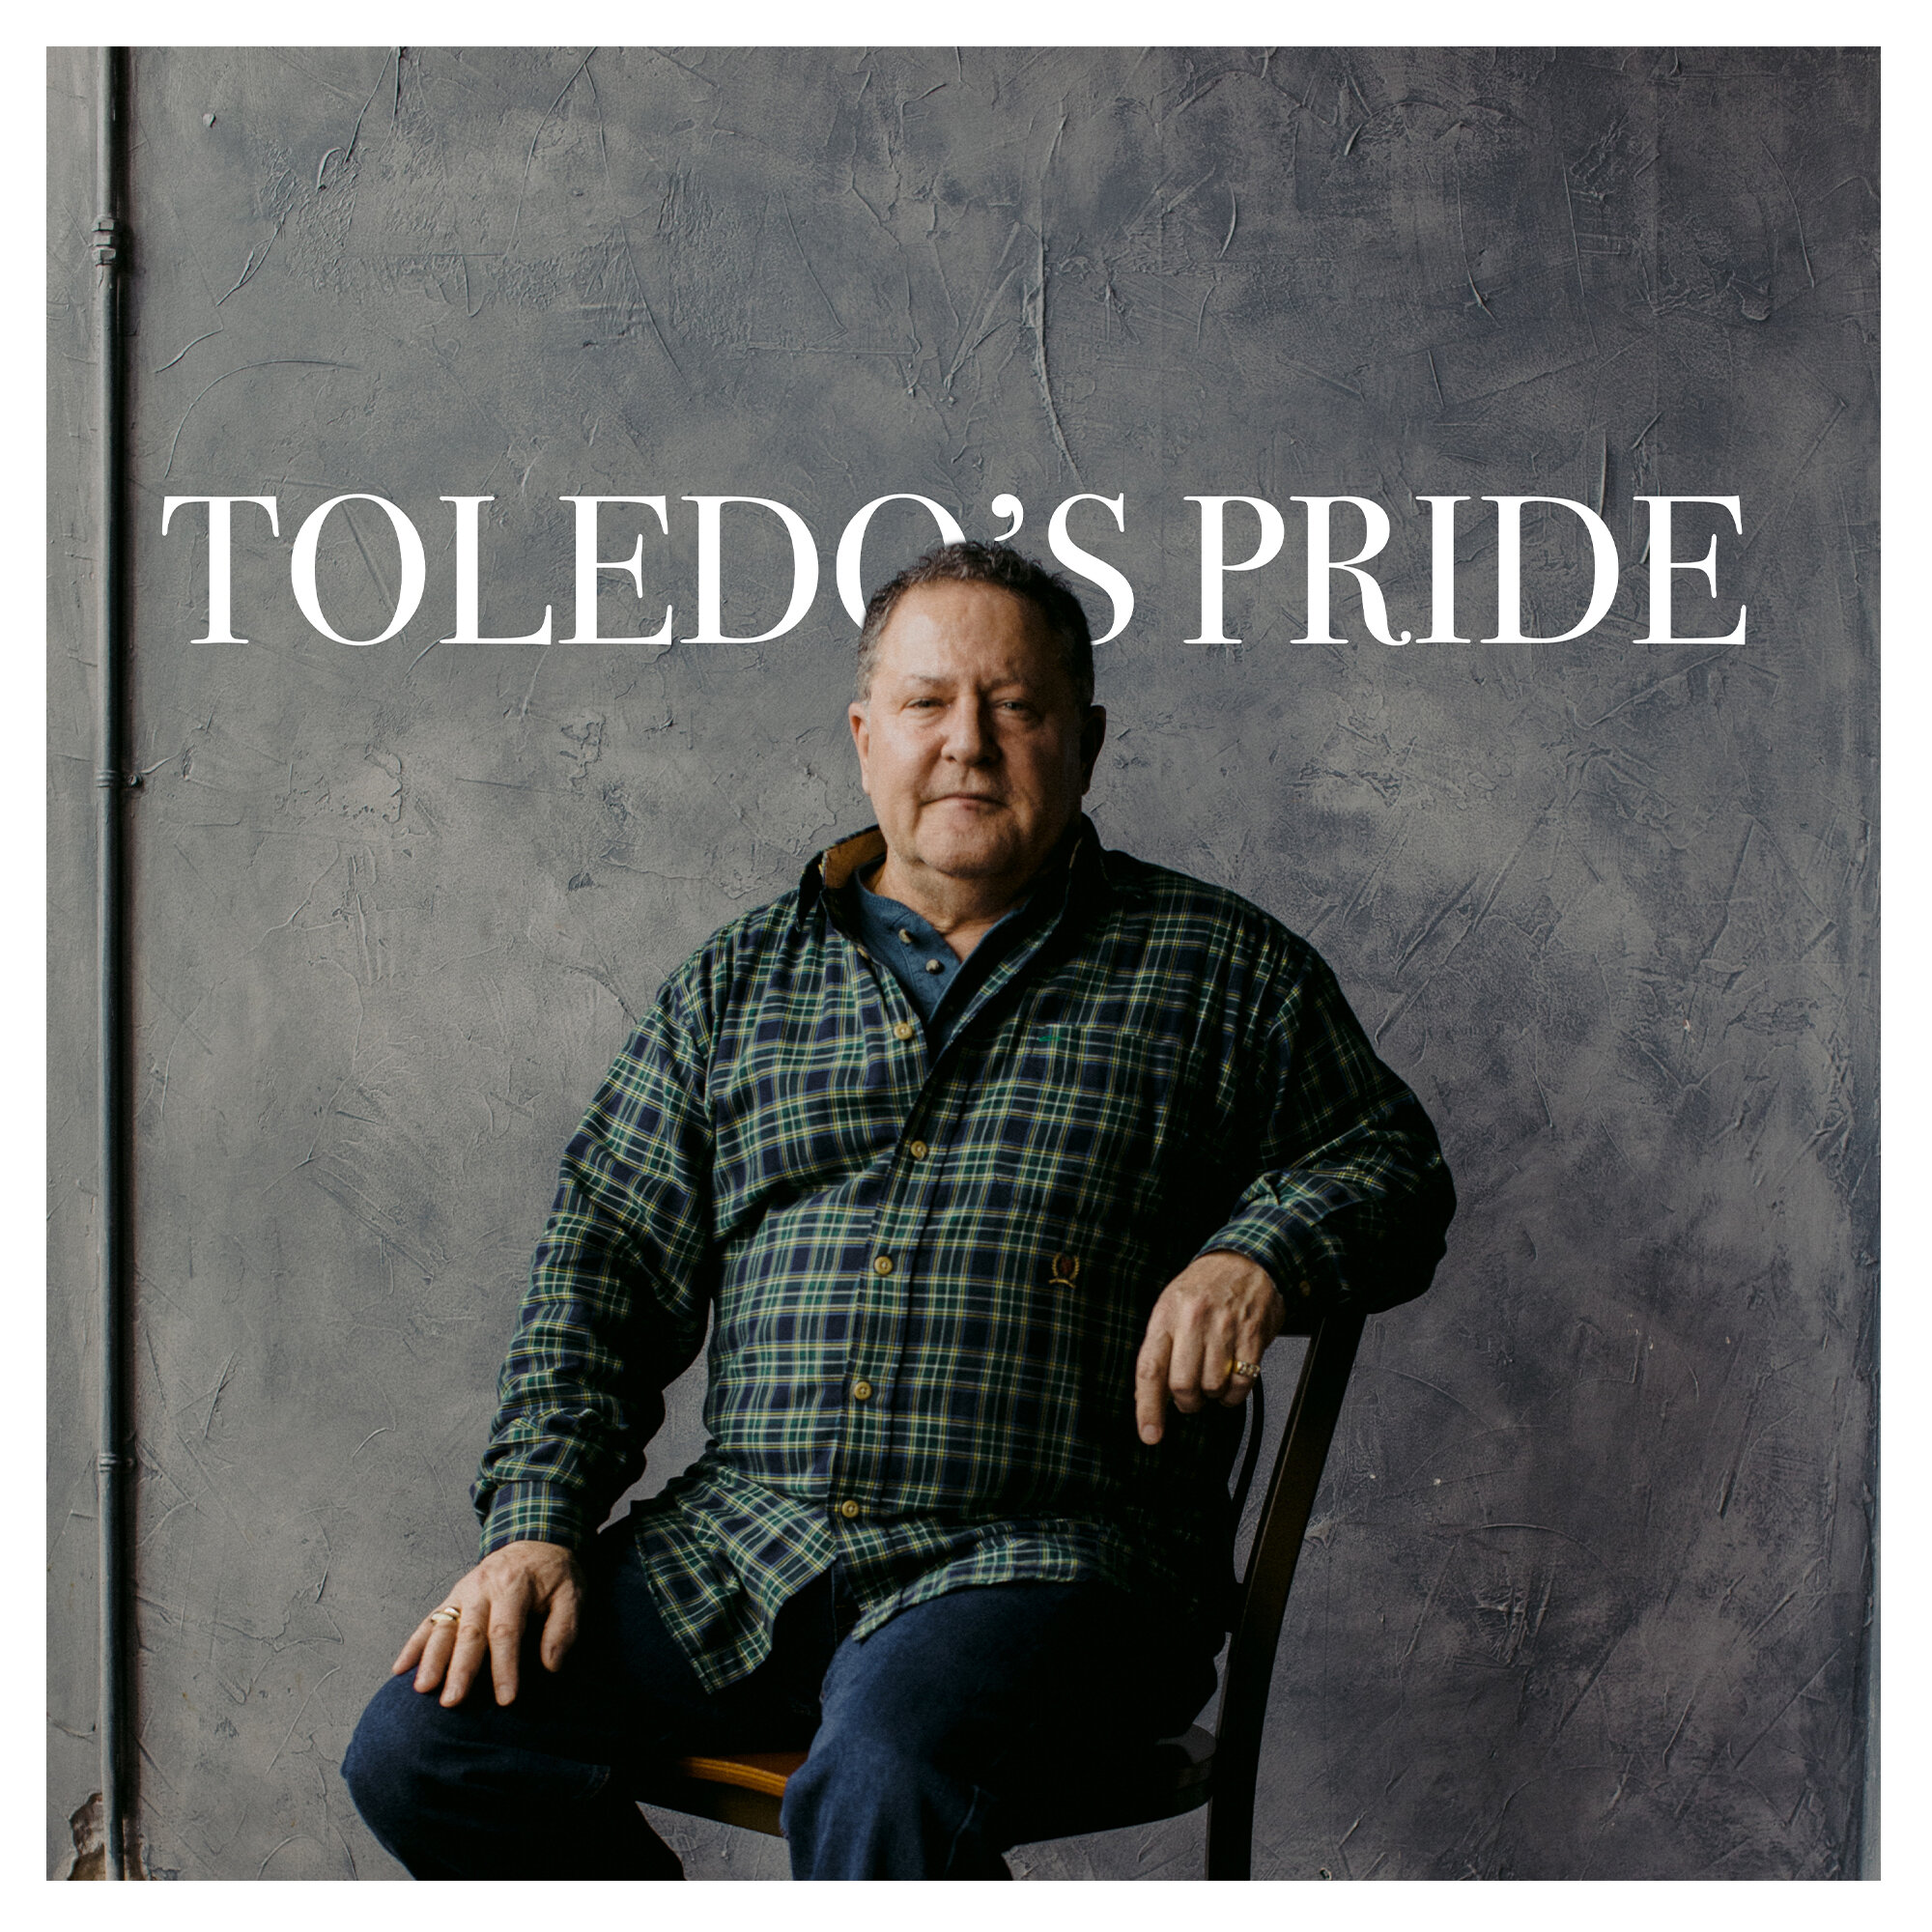 Toledo's Pride-George-Eryc Perez de Tagle Photography-5.jpg